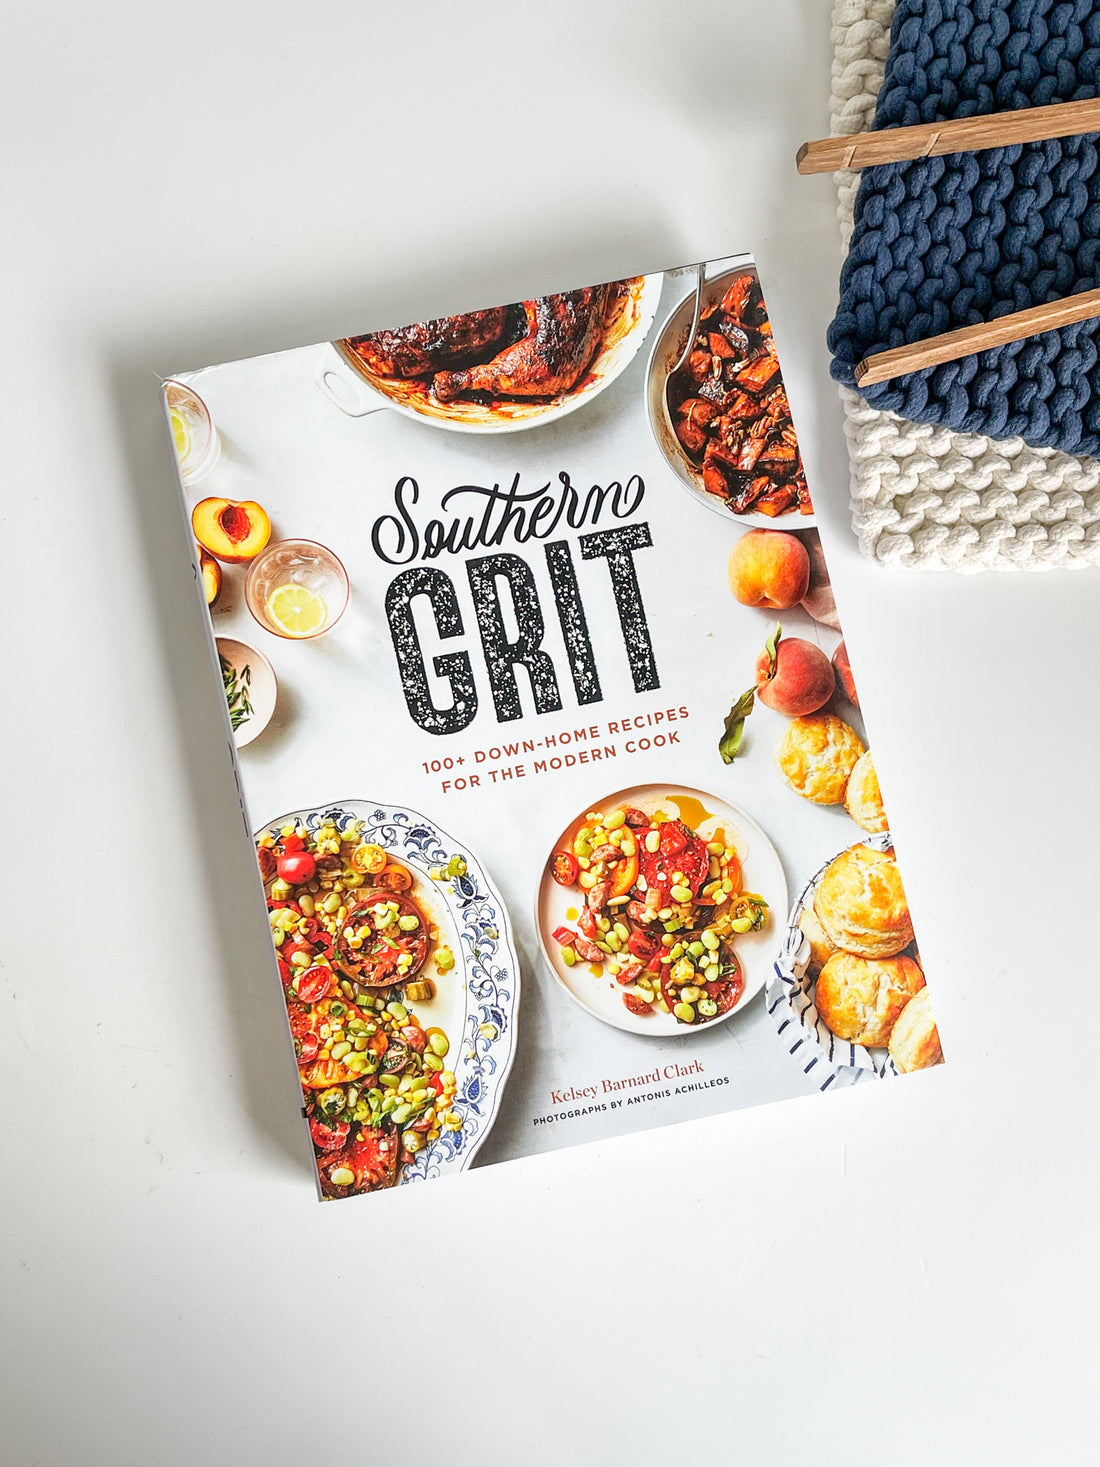 Southern Grit Cookbook